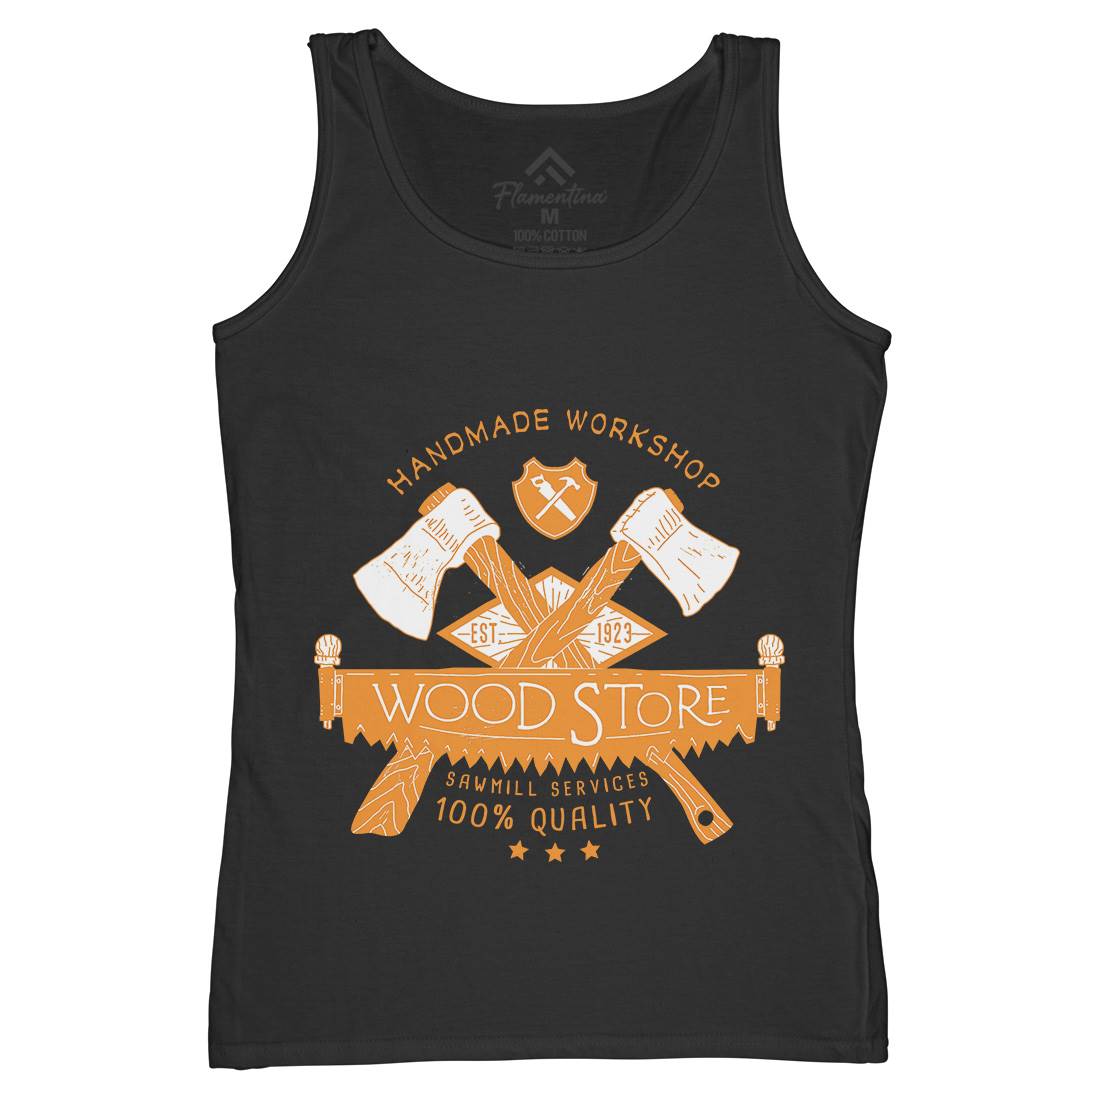 Wood Store Womens Organic Tank Top Vest Work A971